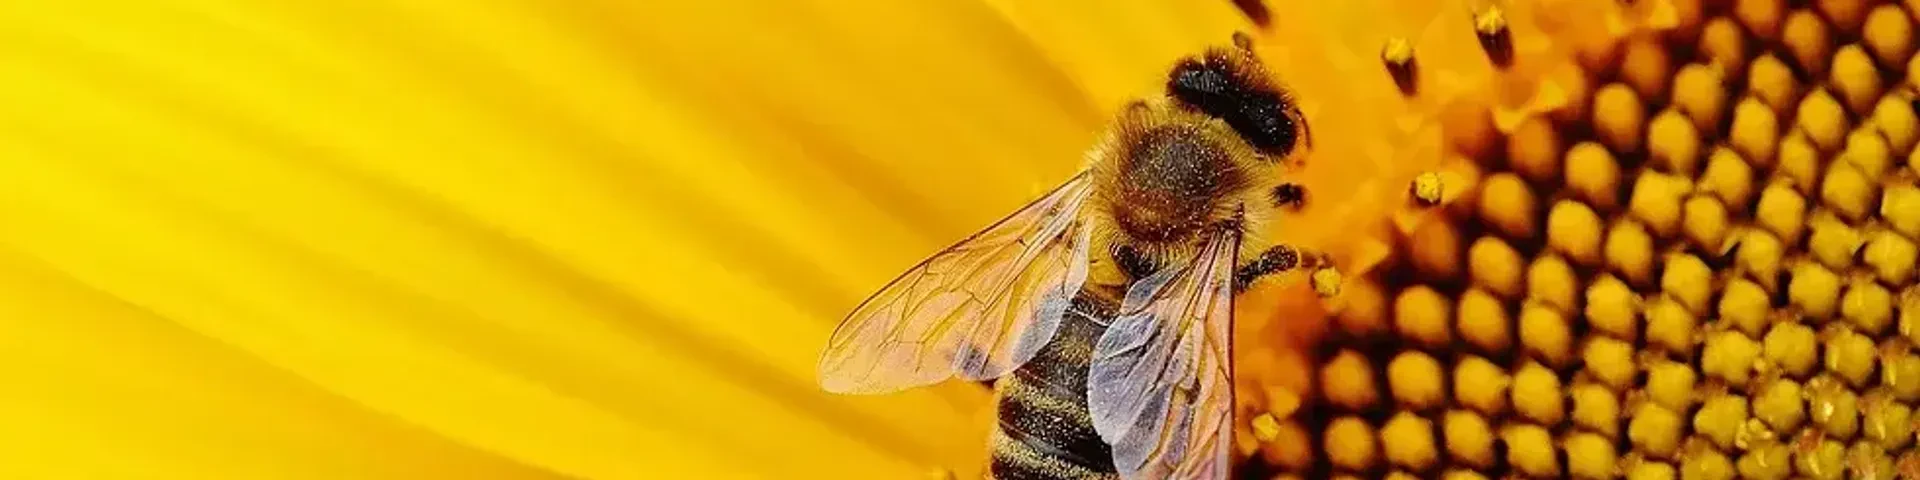 ApiTerra Save the bees